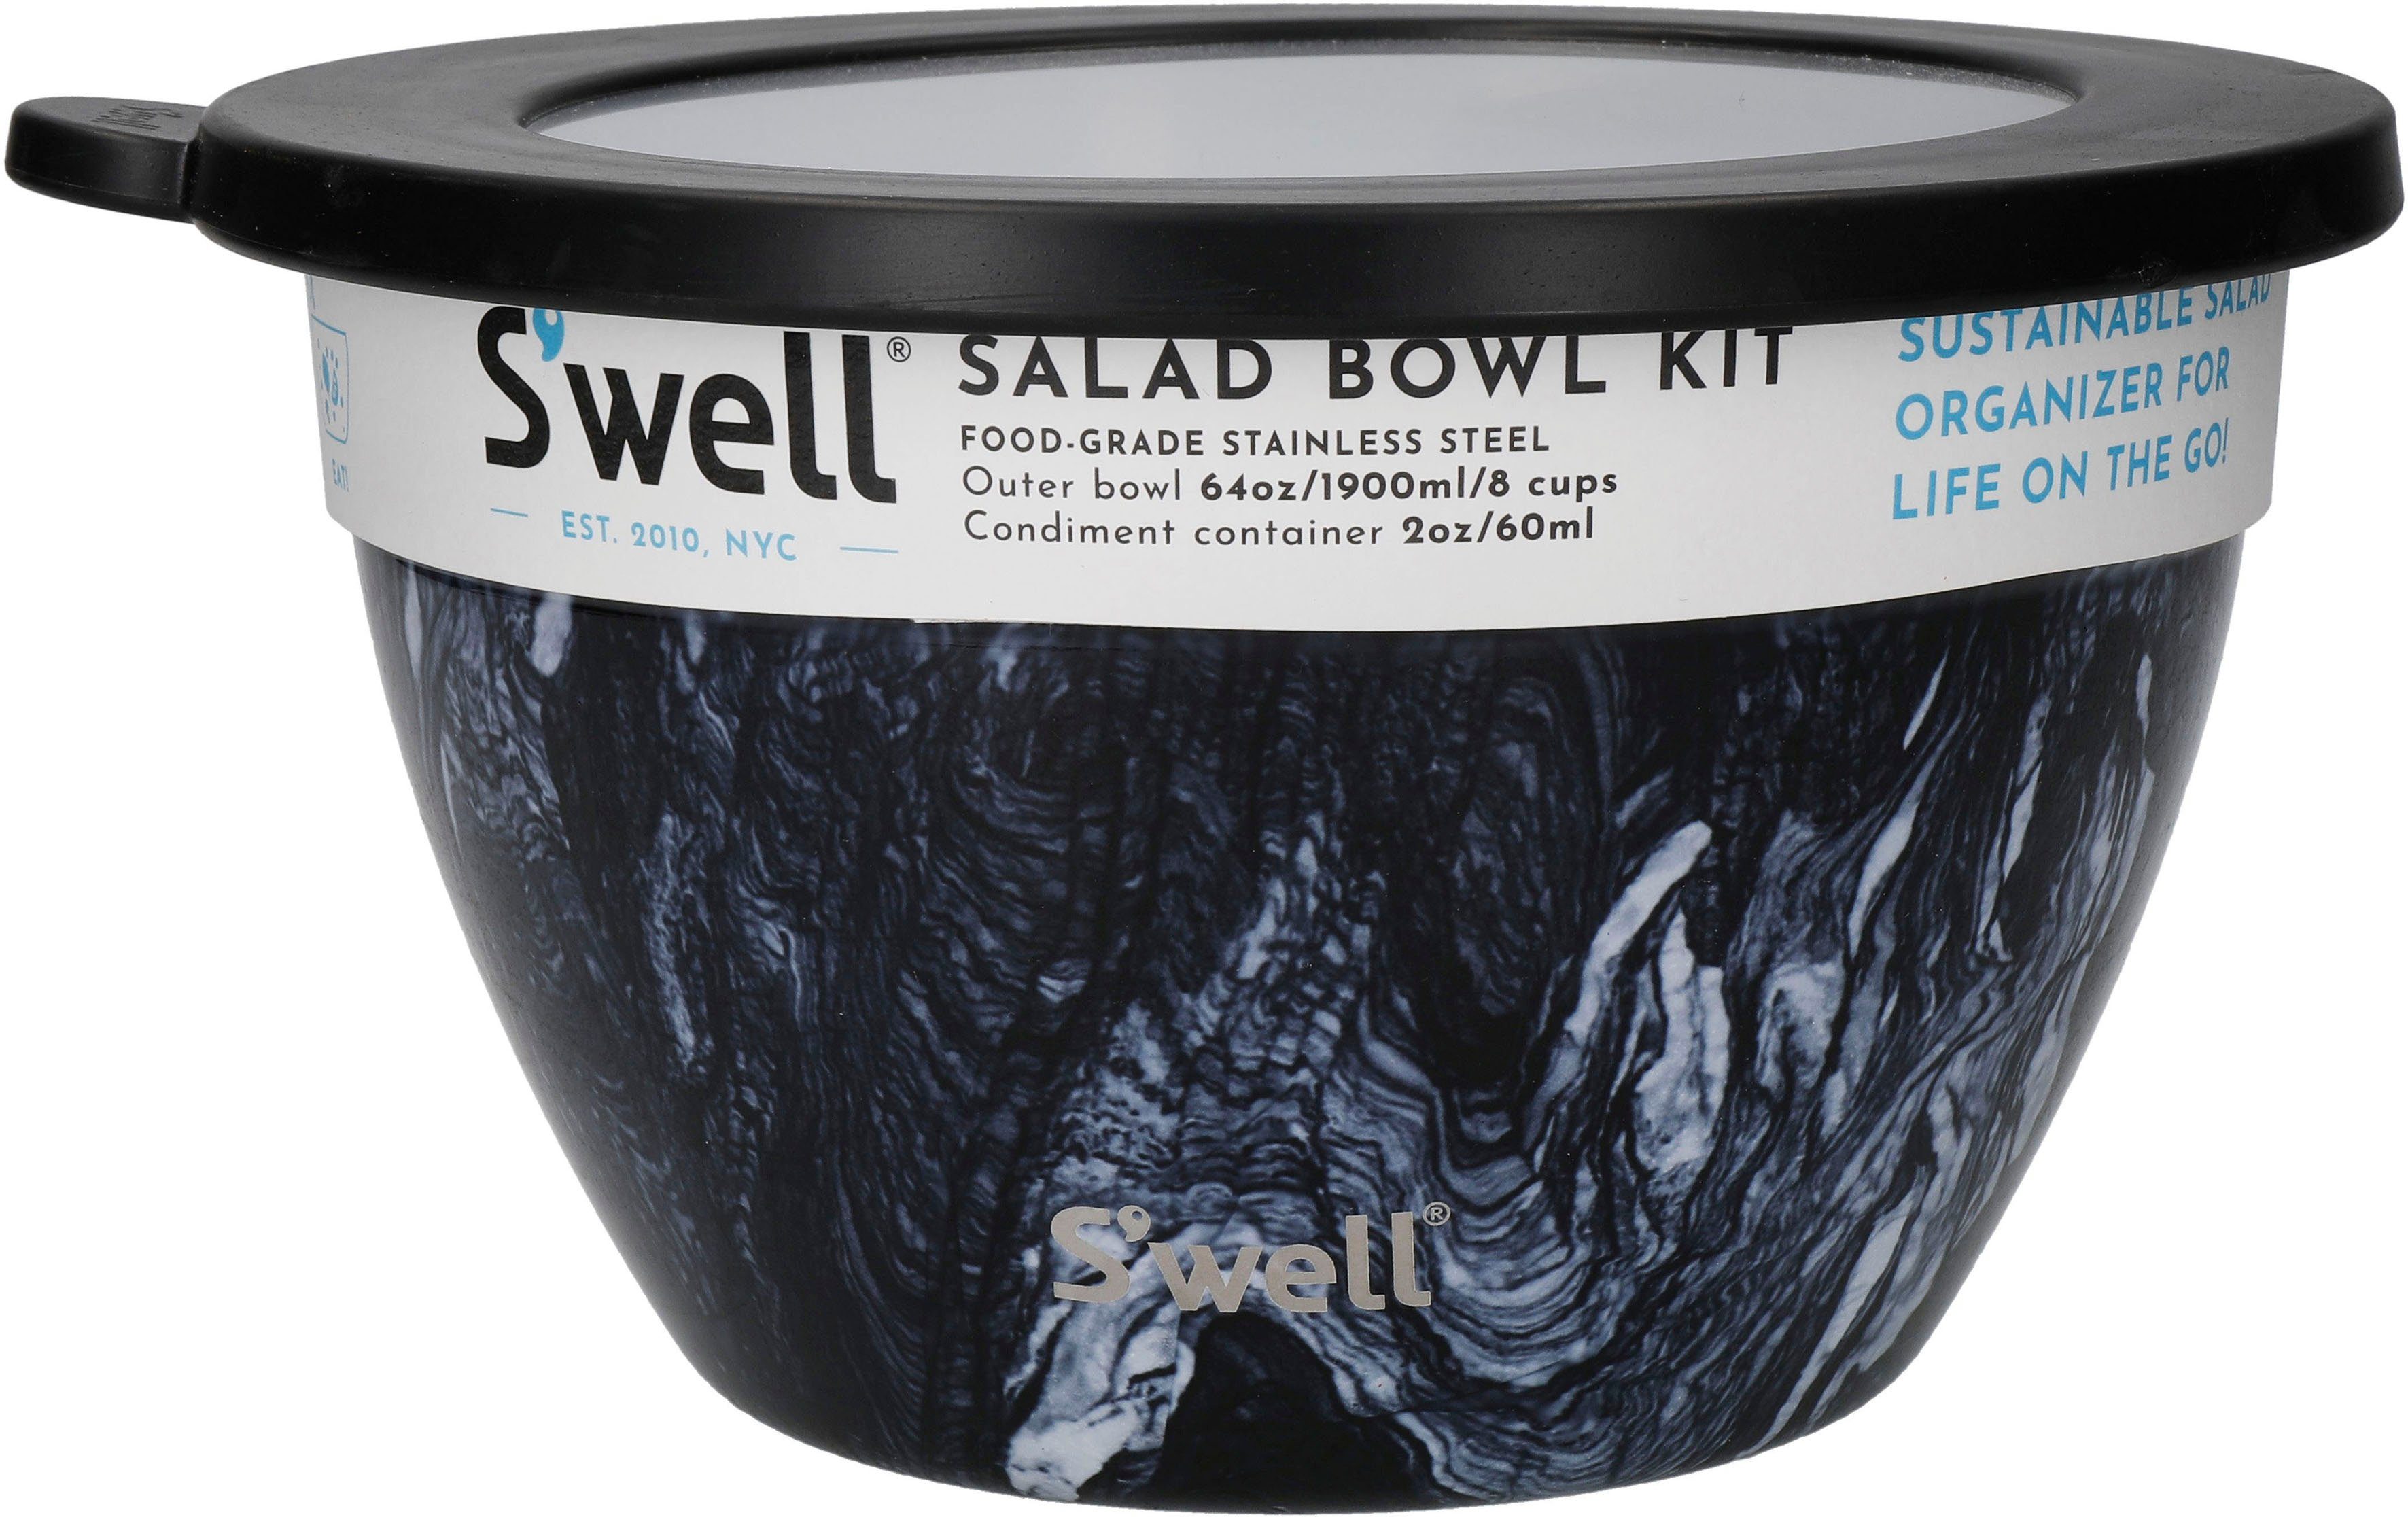 S'well Salatschüssel S'well Onyx Salad Bowl Kit, Azurit-Marmor Außenschale 1.9L, (3-tlg), Edelstahl, vakuumisolierten Therma-S'well®-Technologie